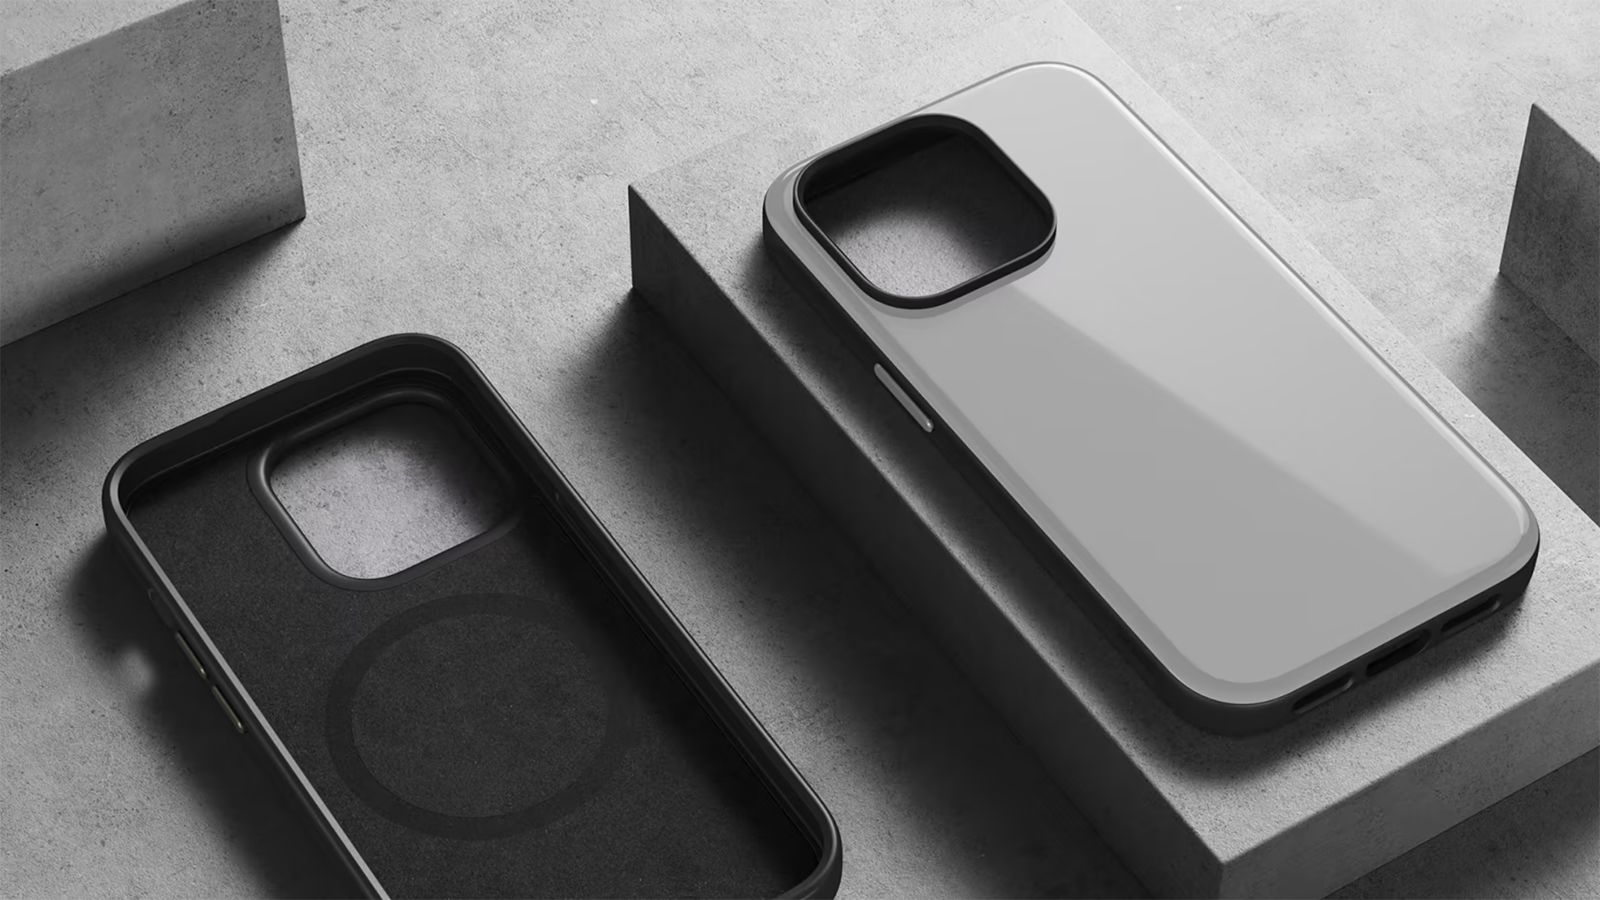 Metallic Matte Clear Hard Case - iPhone 14 Pro Max (Purple)